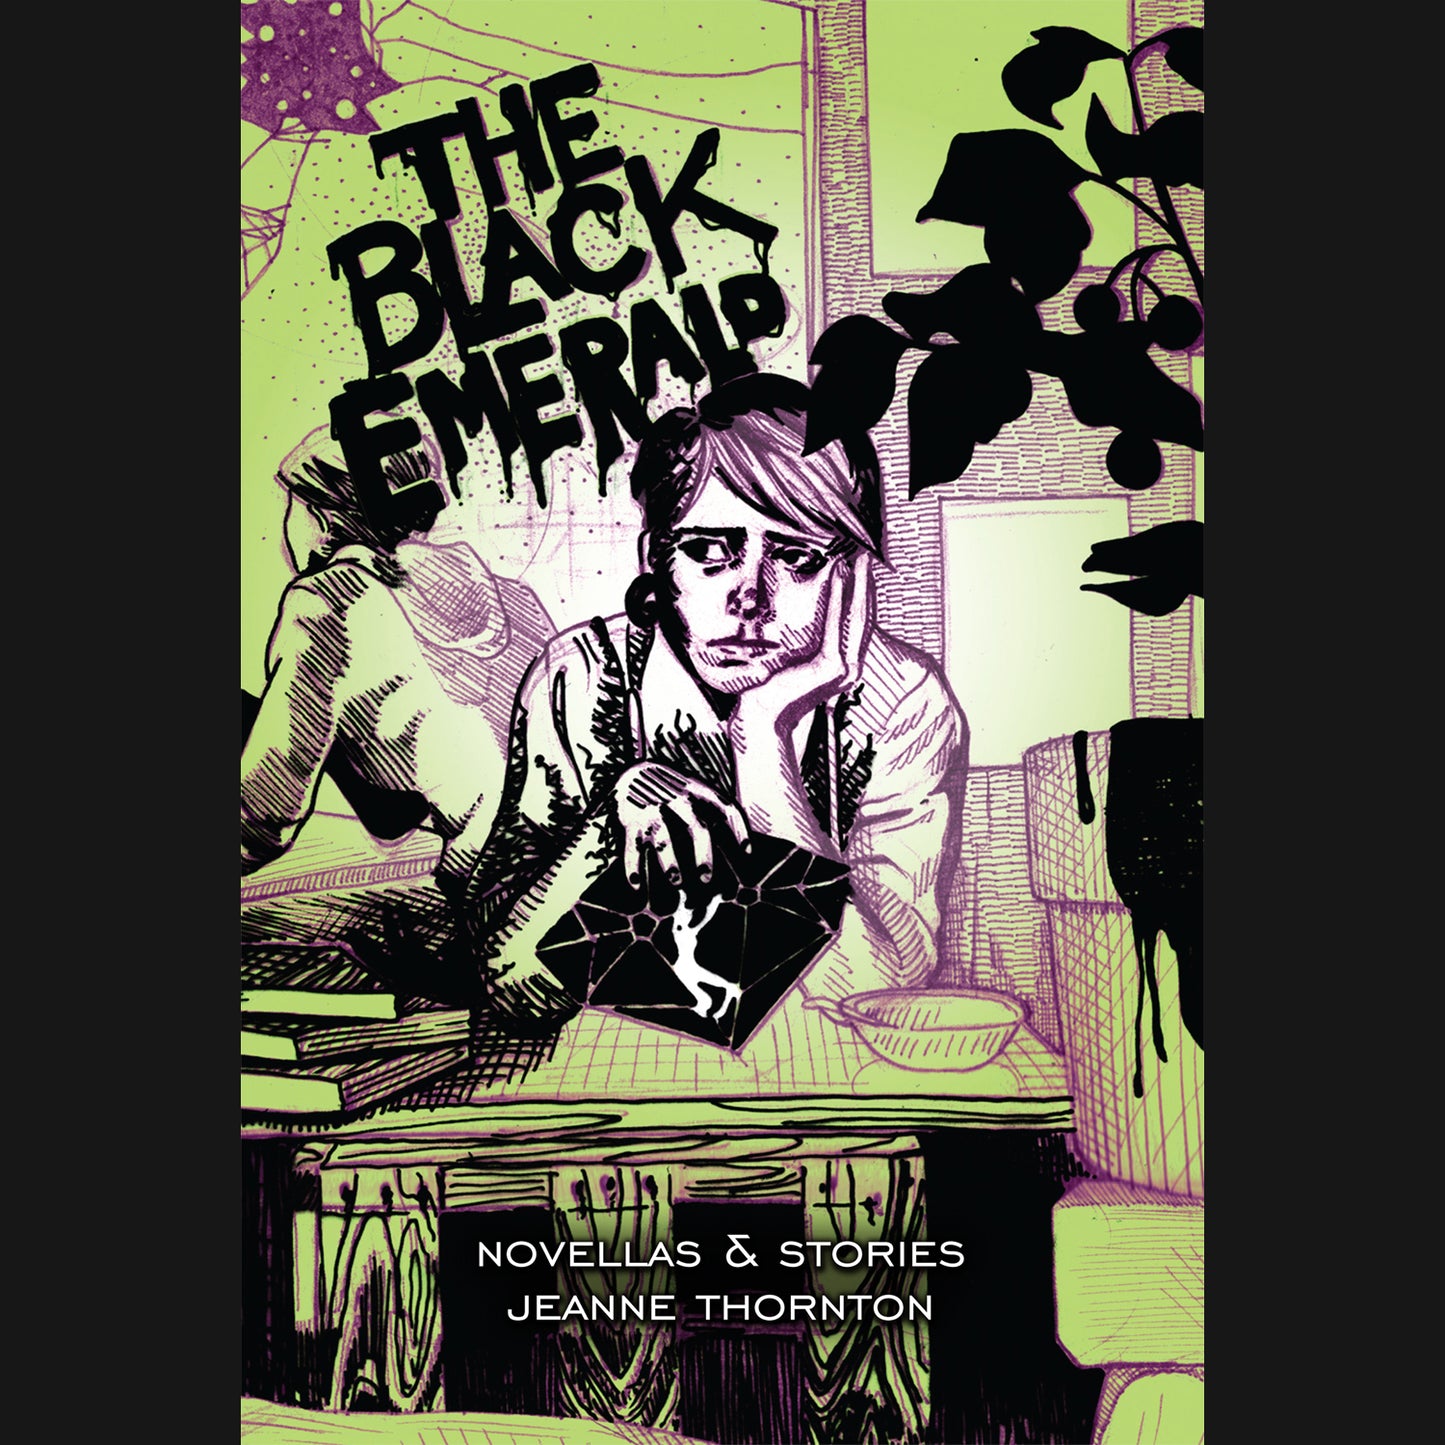 JEANNE THORNTON - "THE BLACK EMERALD" BOOK